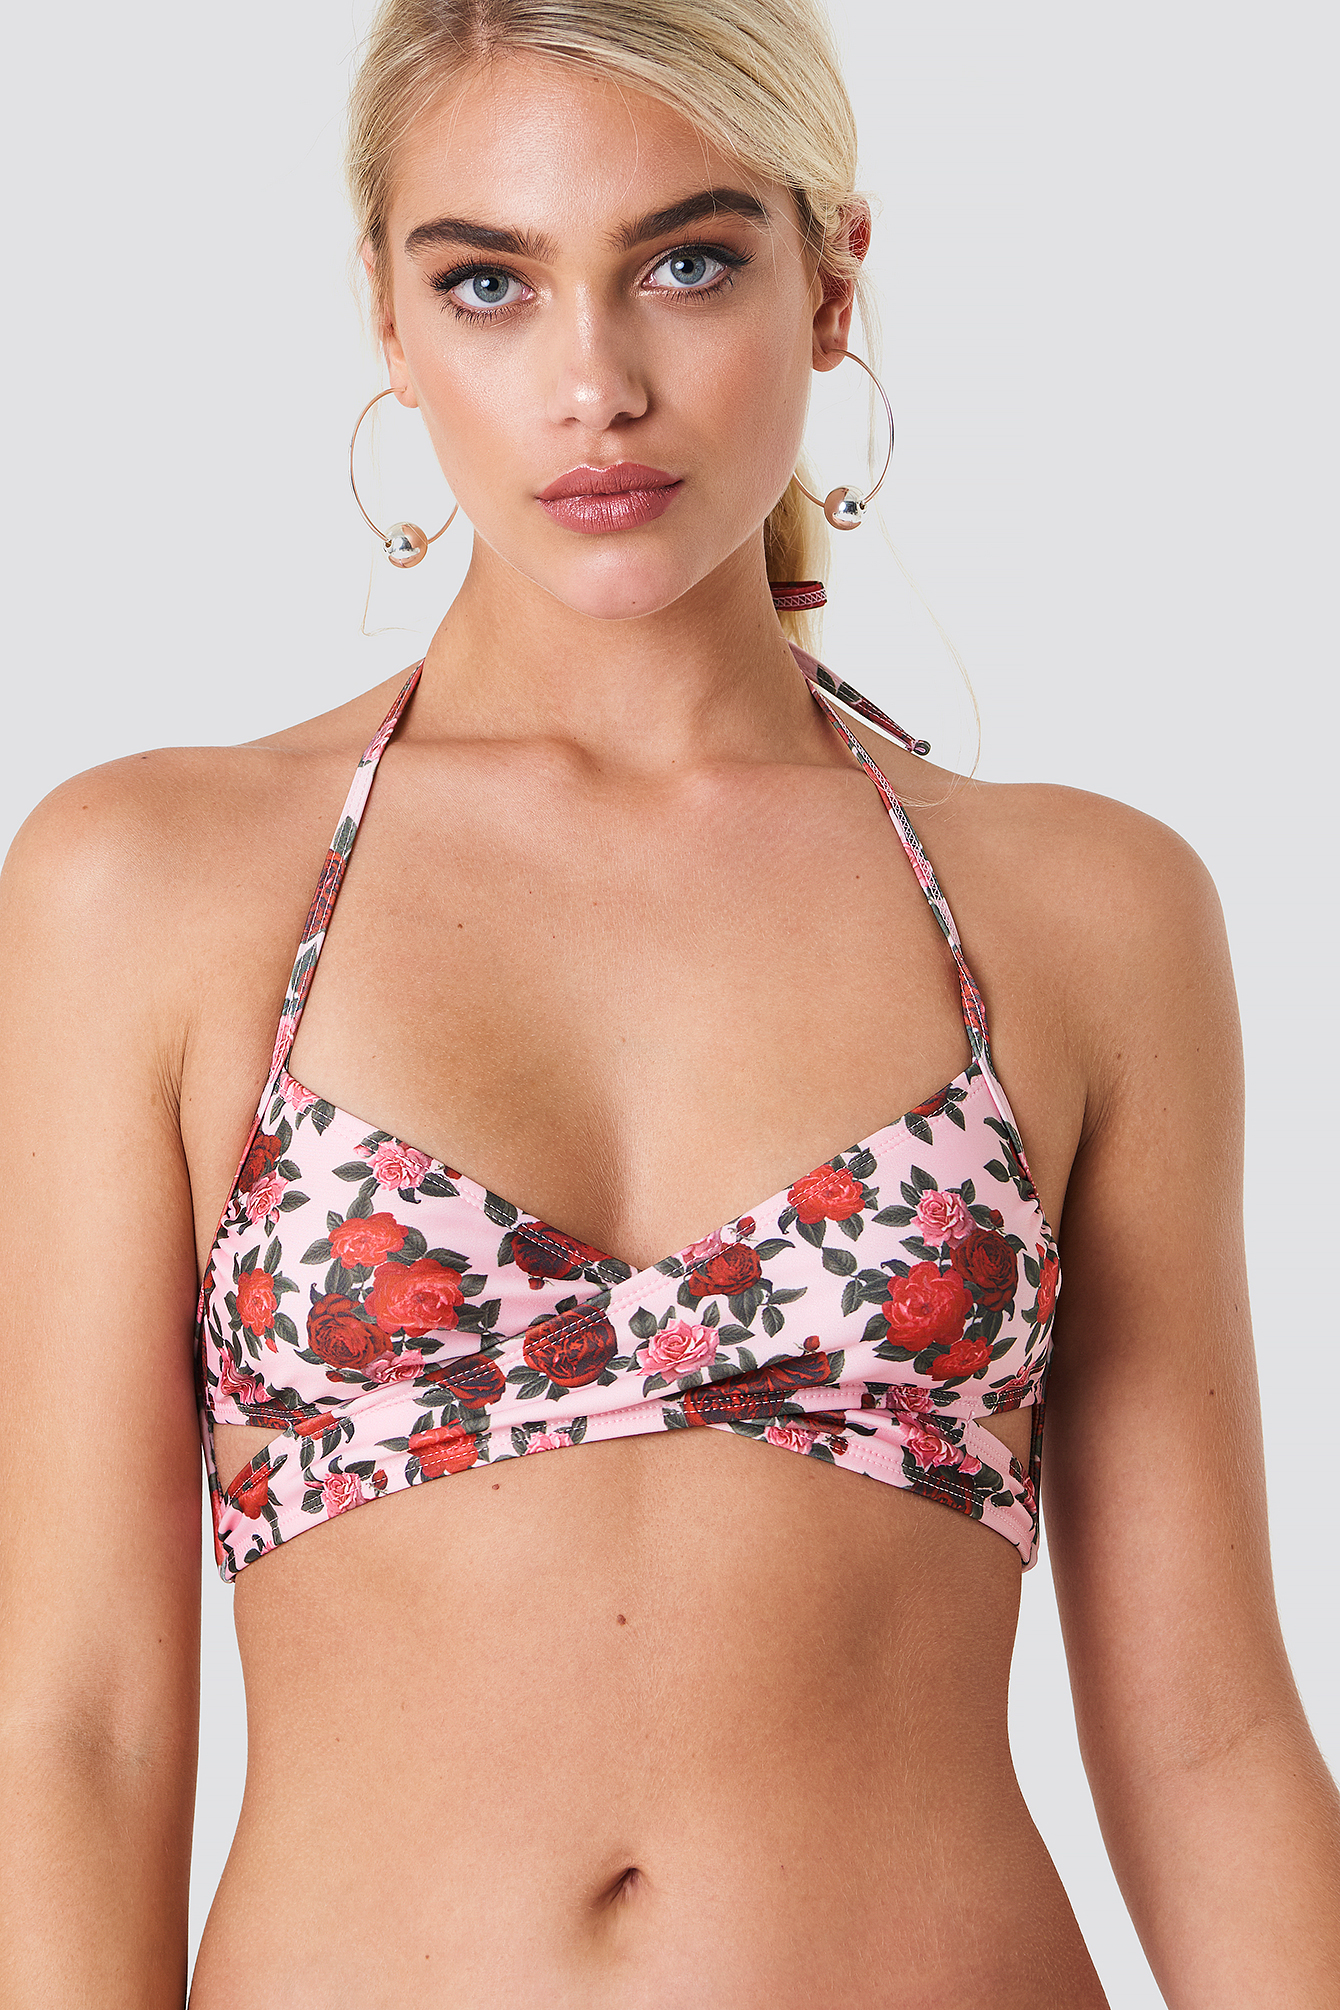 Damen Bekleidung Bademode und Strandmode Bikinis und Badeanzüge NA-KD Synthetik Swimwear Cross-front-Bikini-Top in Pink 